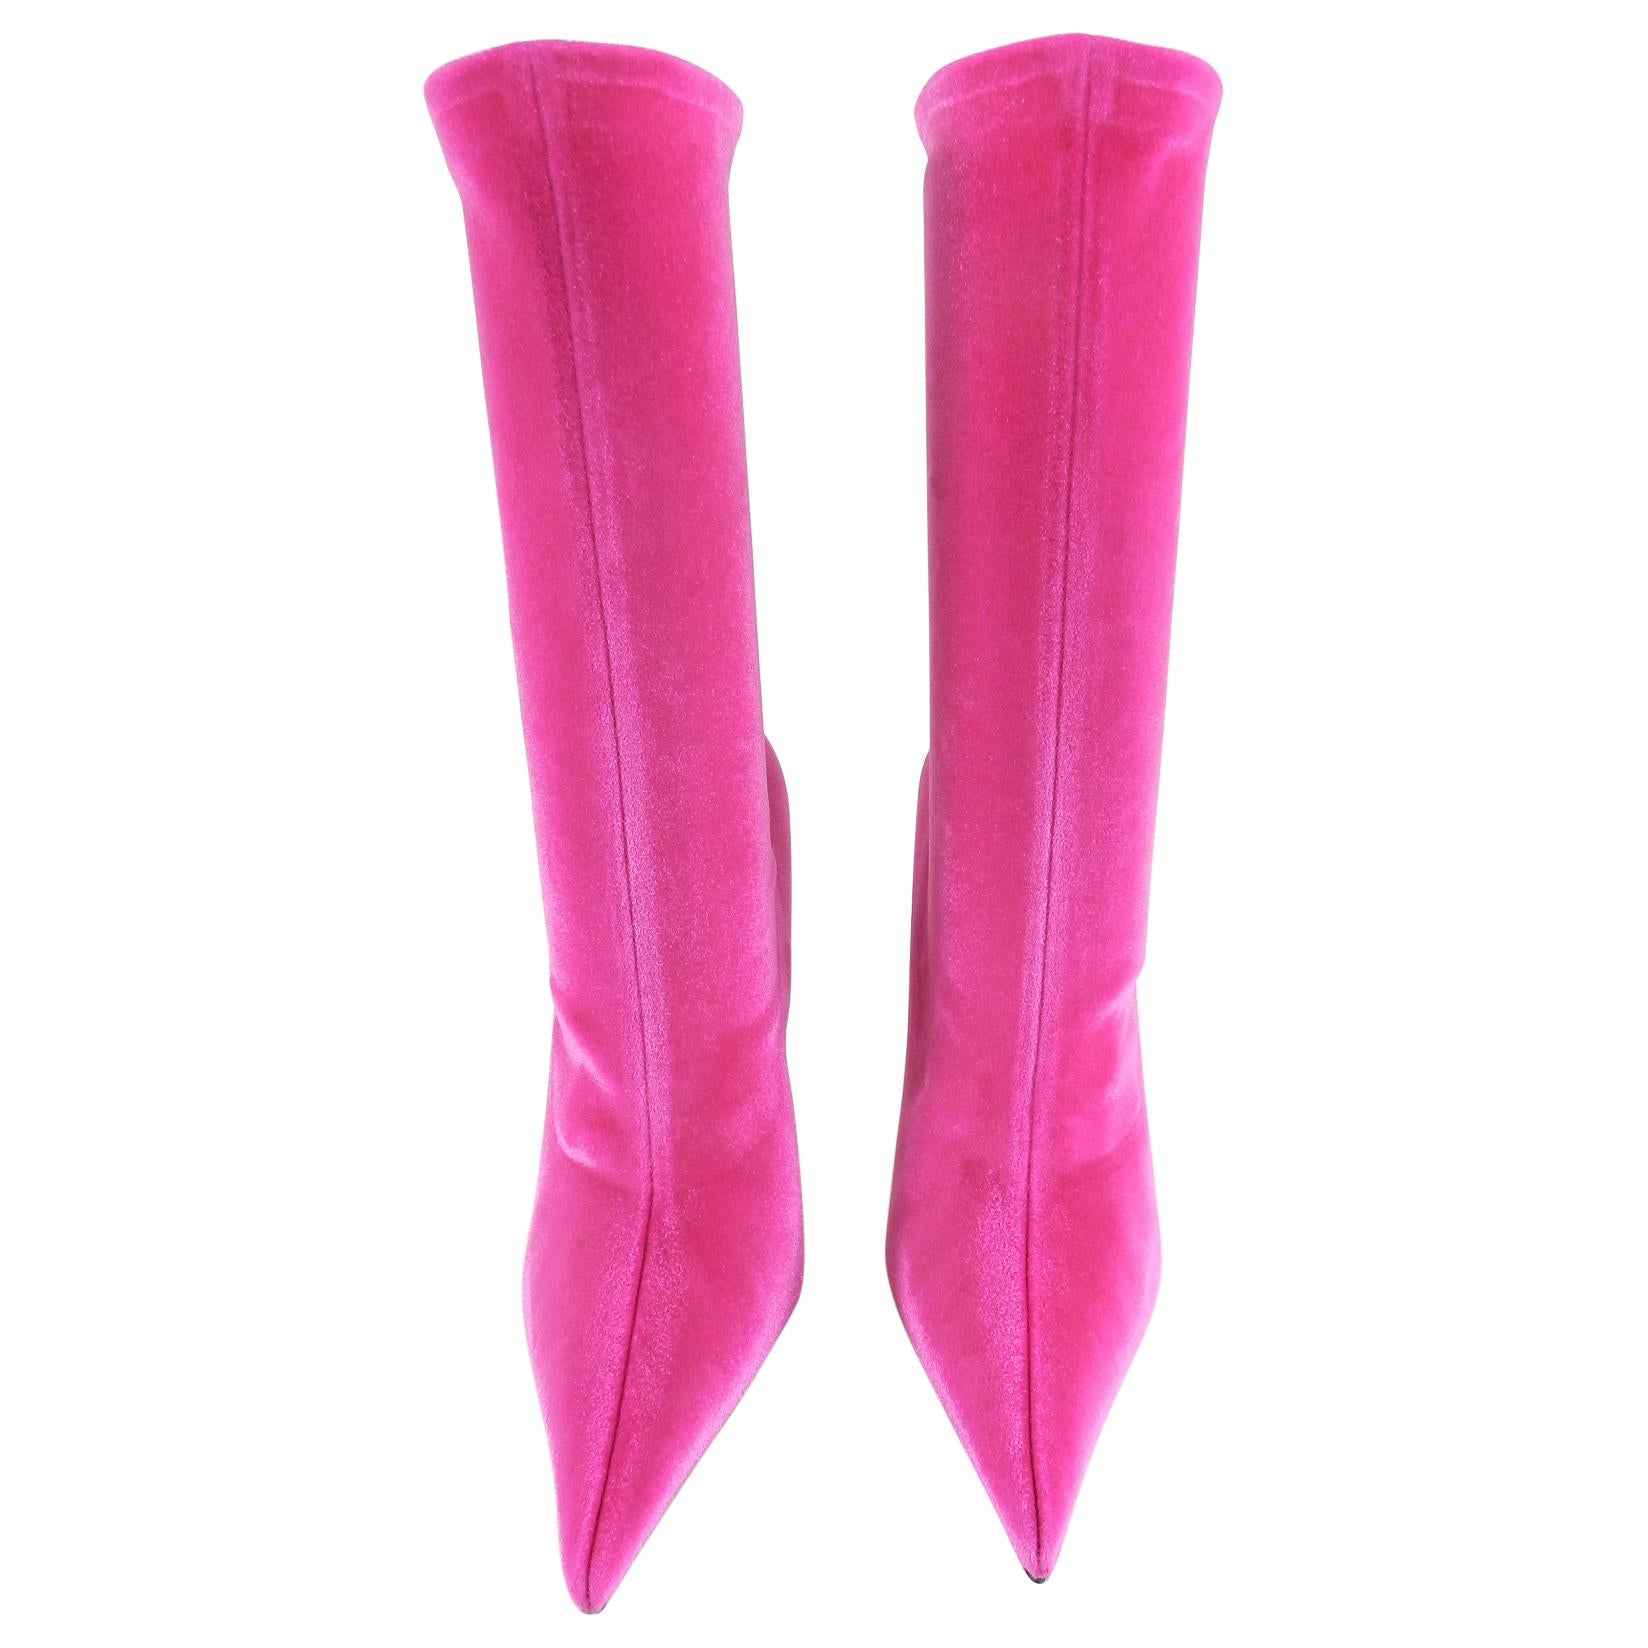 pink balenciaga boots